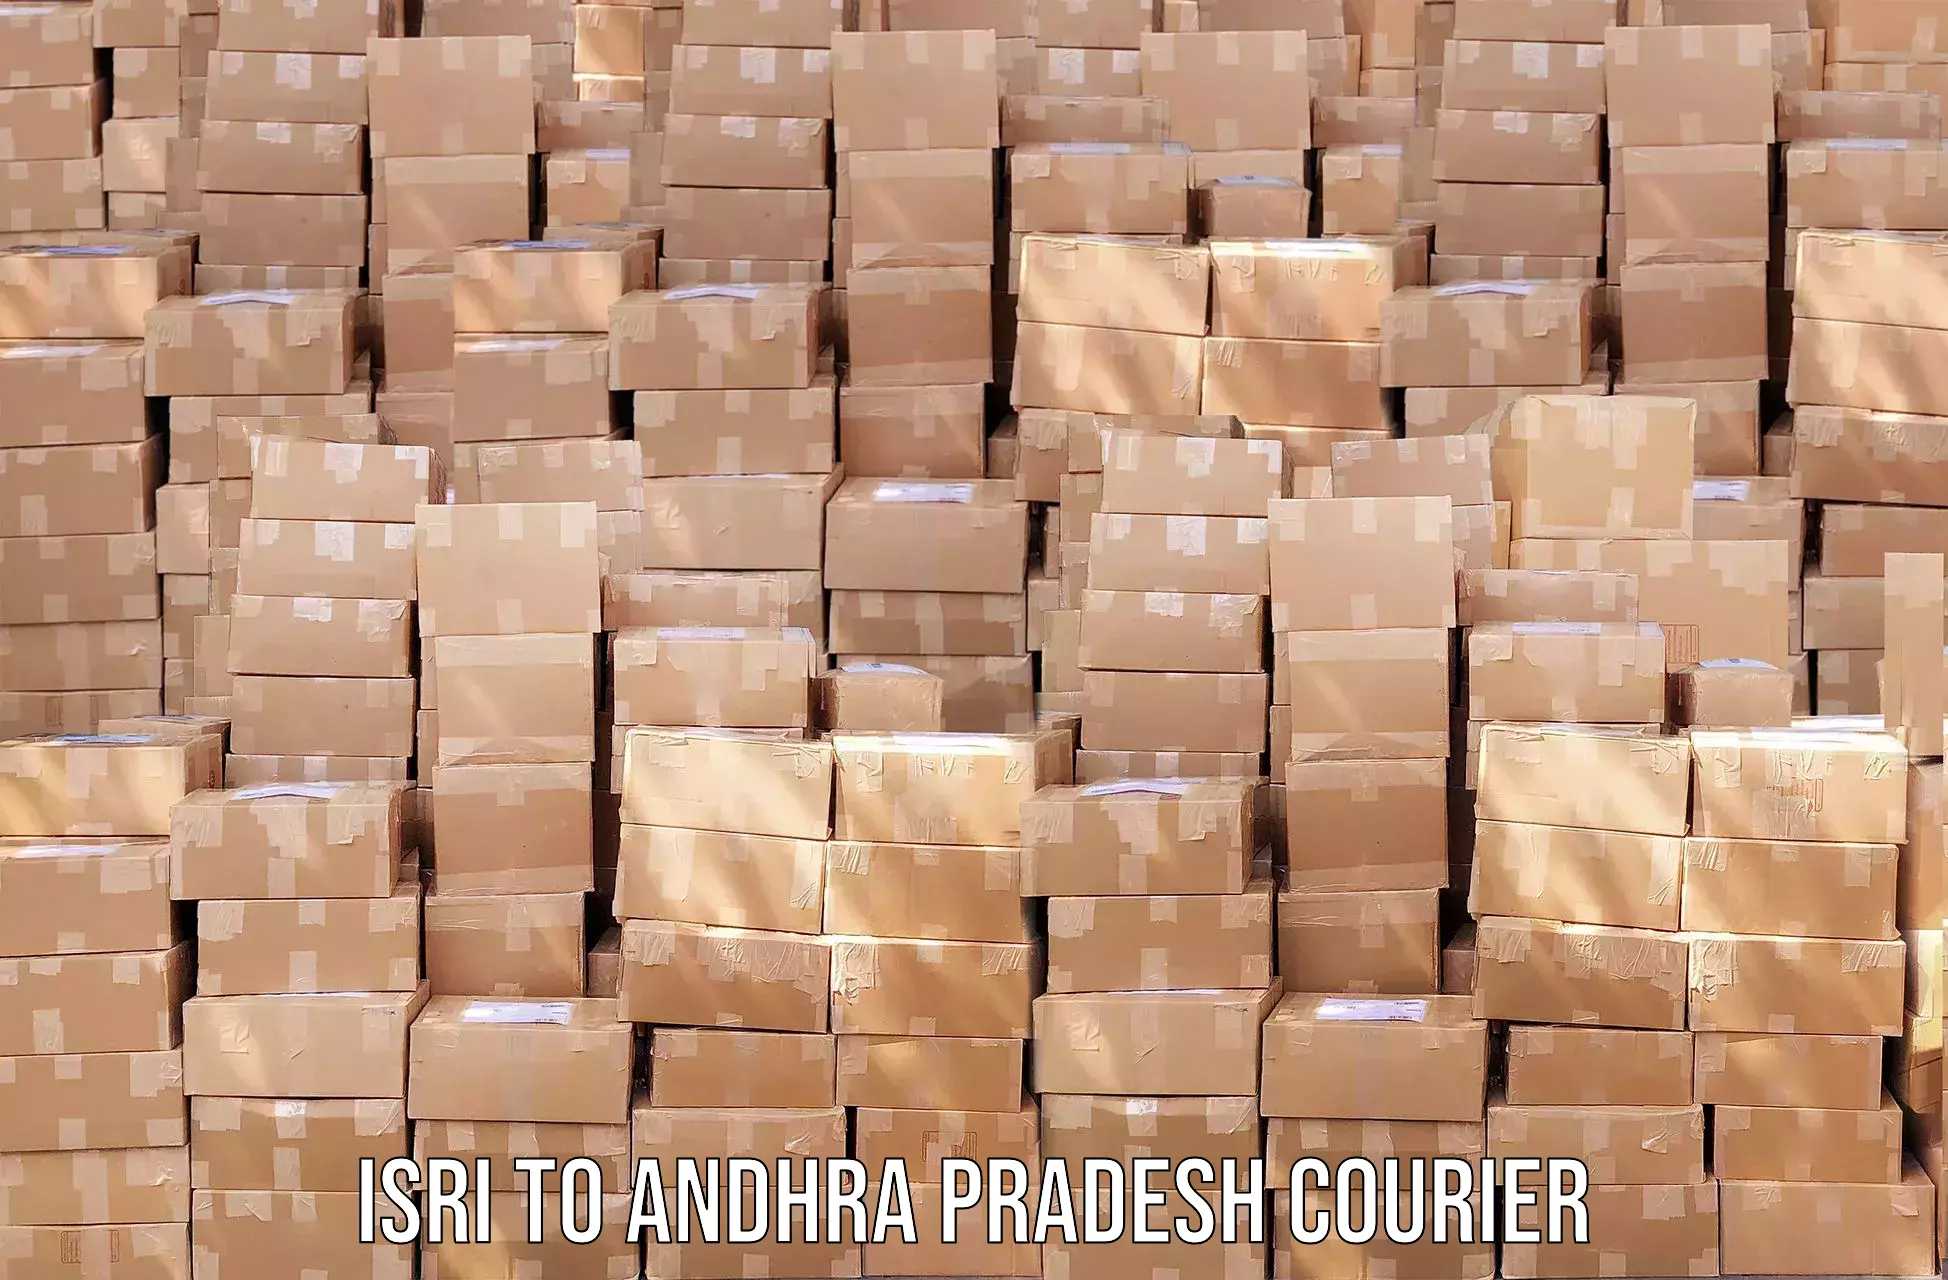 Courier app Isri to Sri City